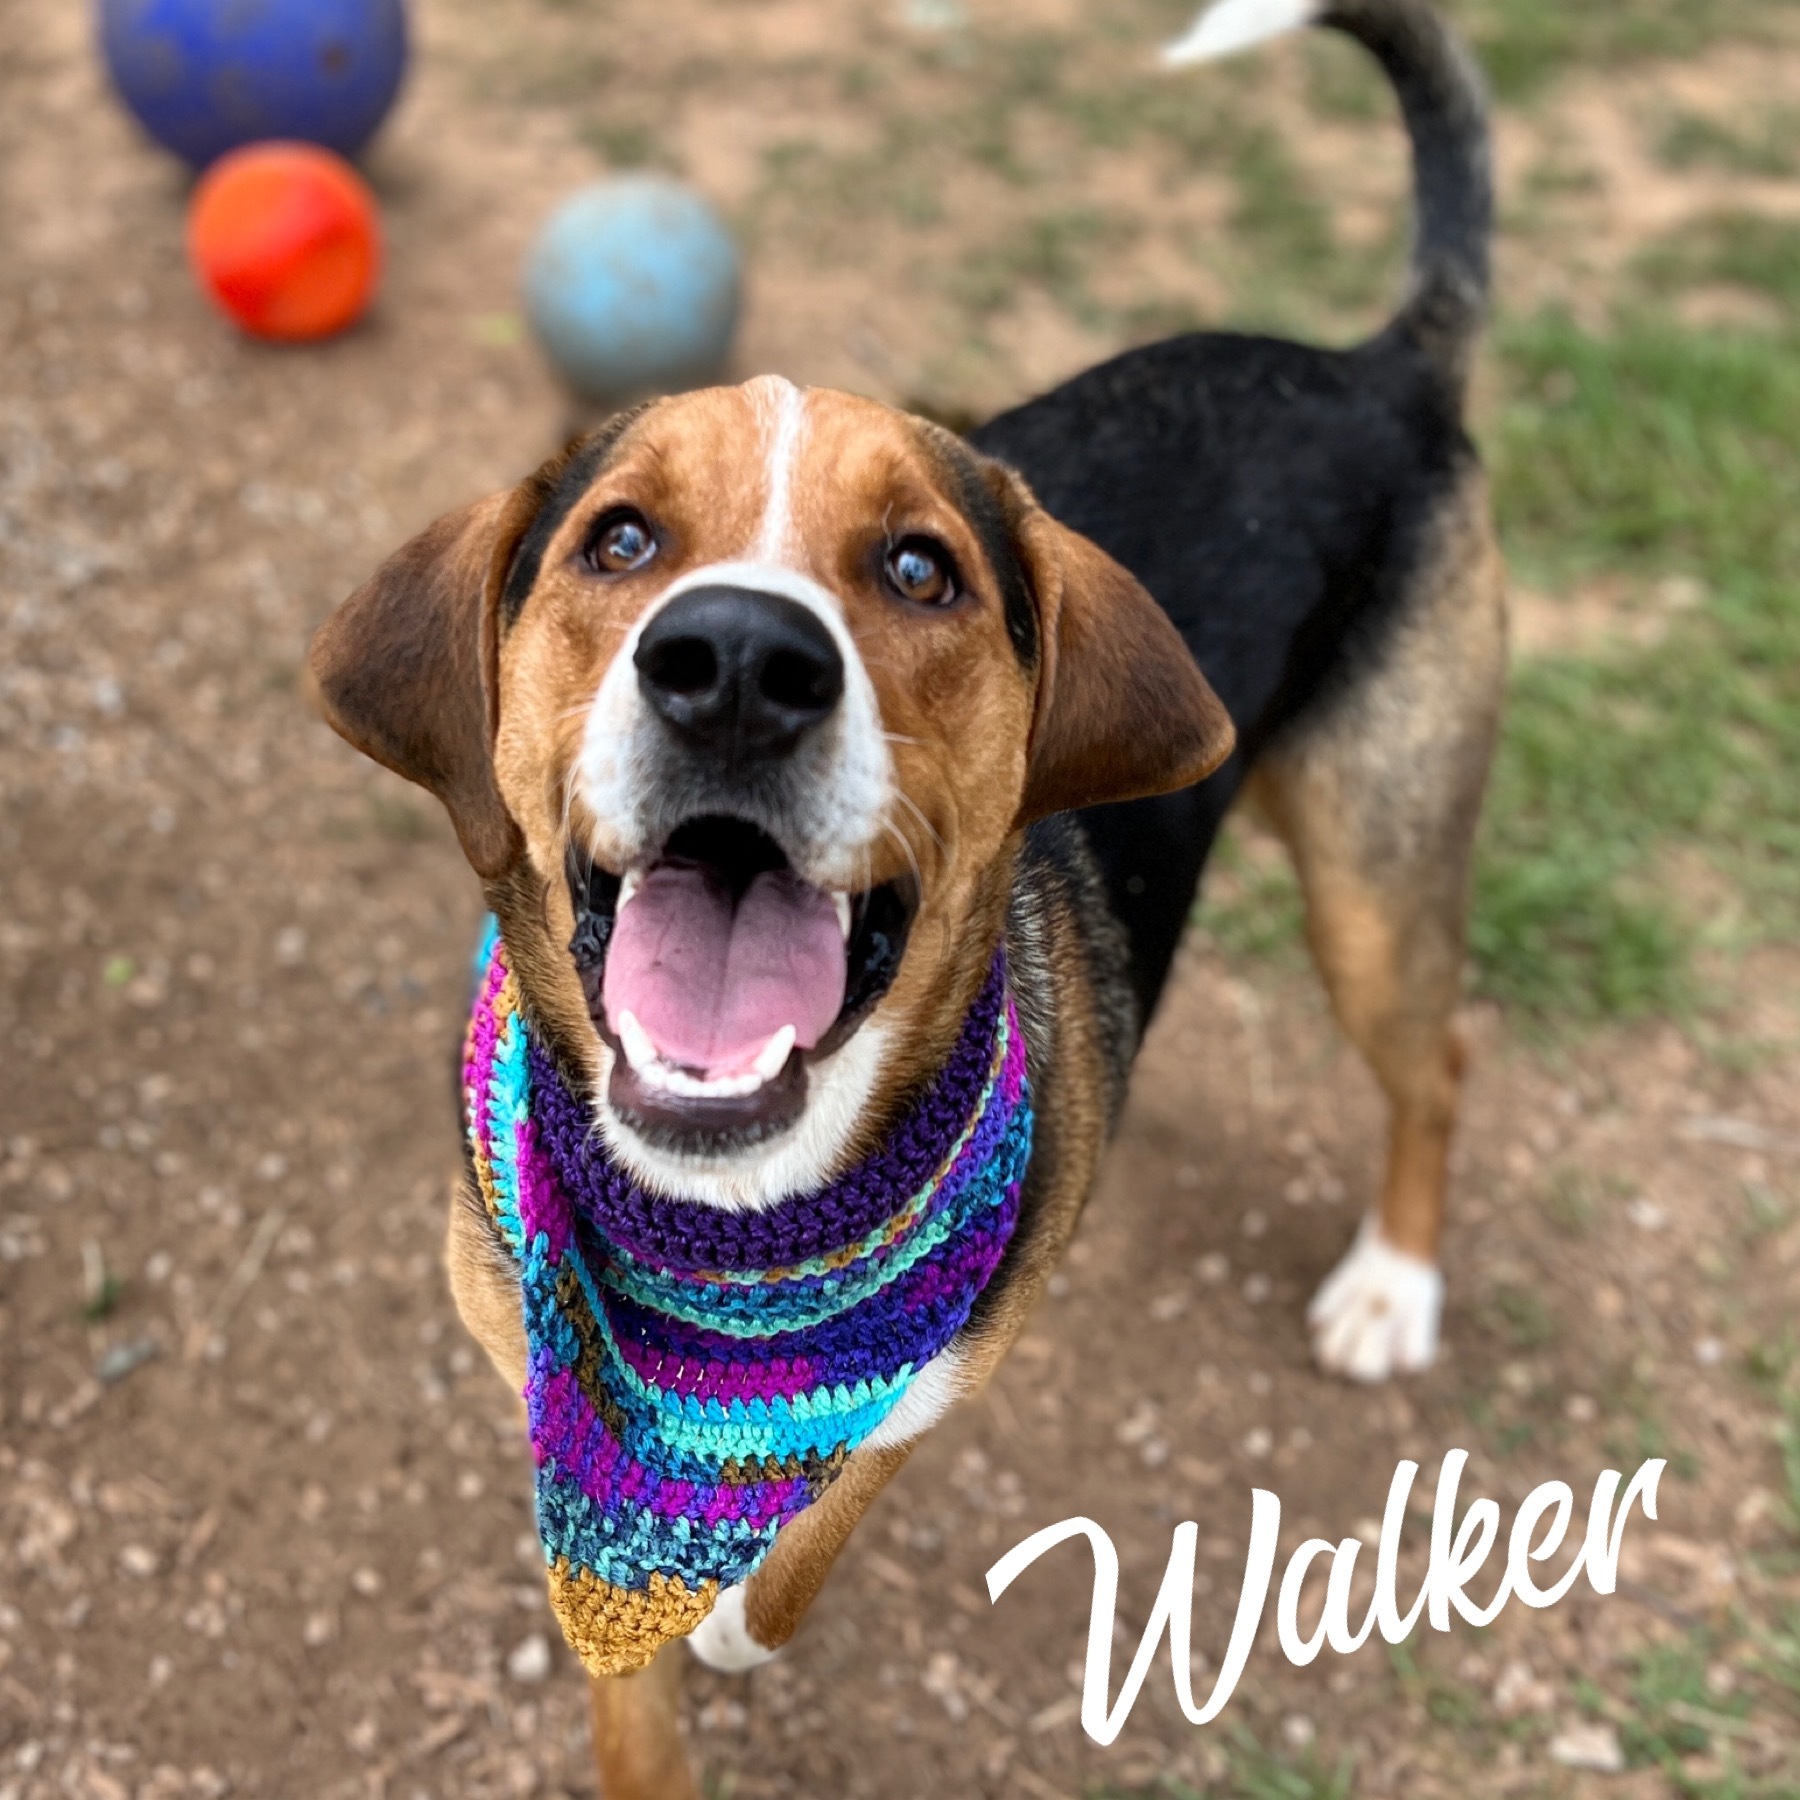 Walker - $25 Adoption Fee